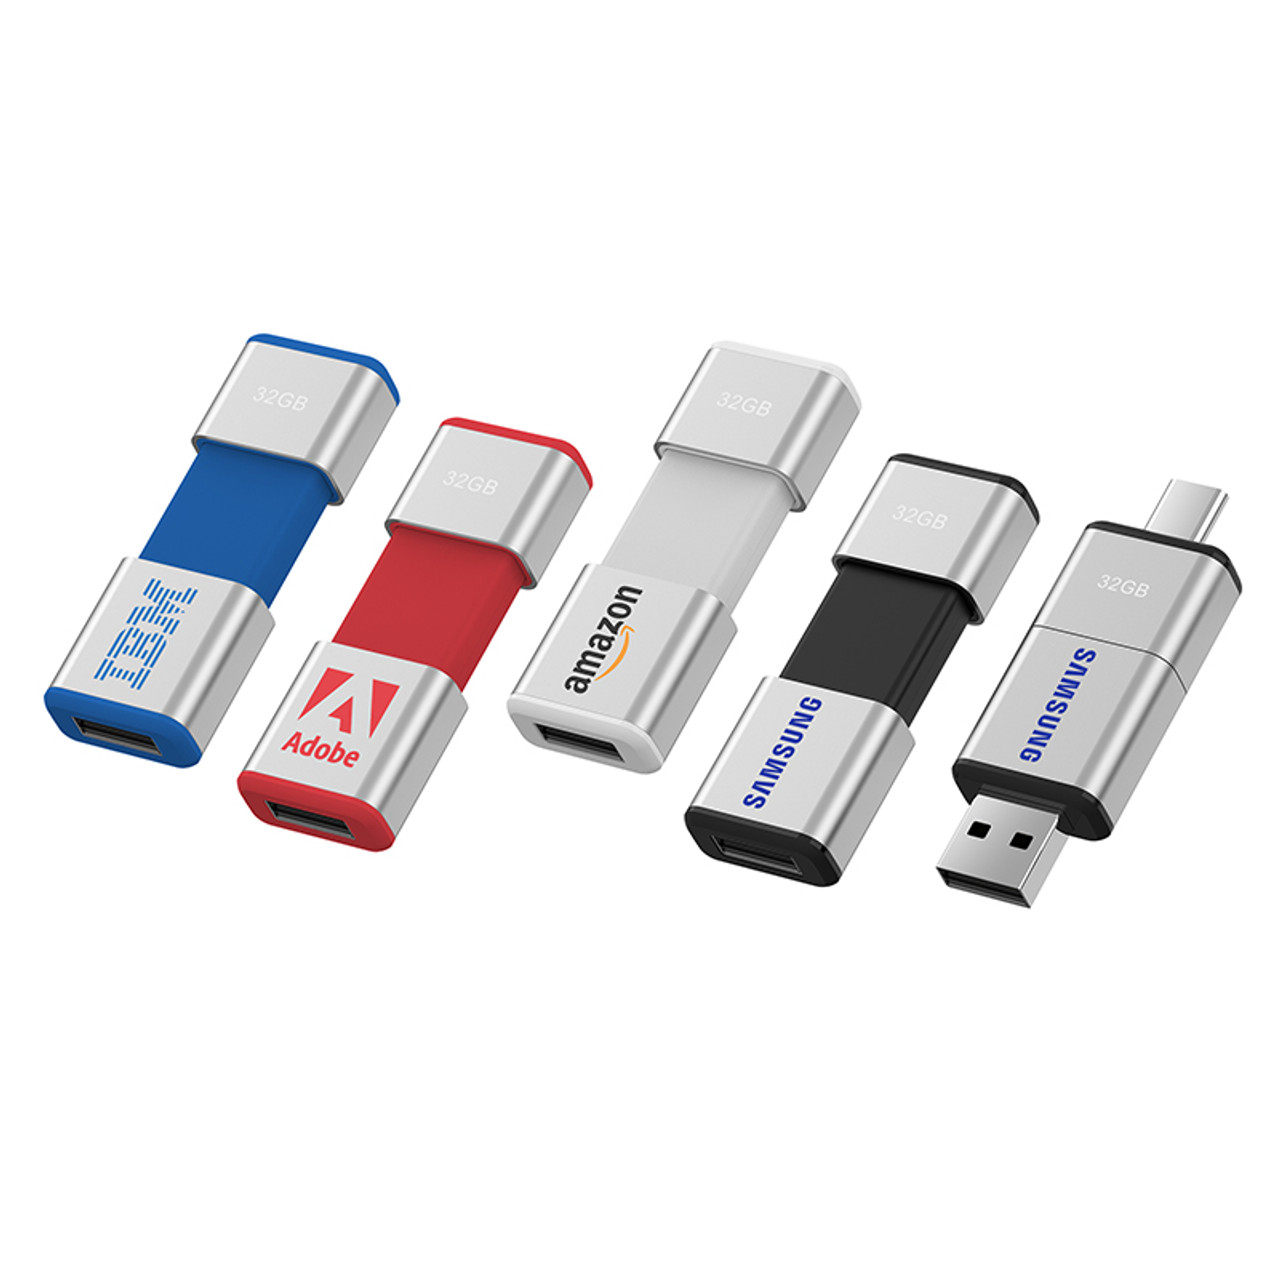 Custom Flash Drive With USB-C, Active